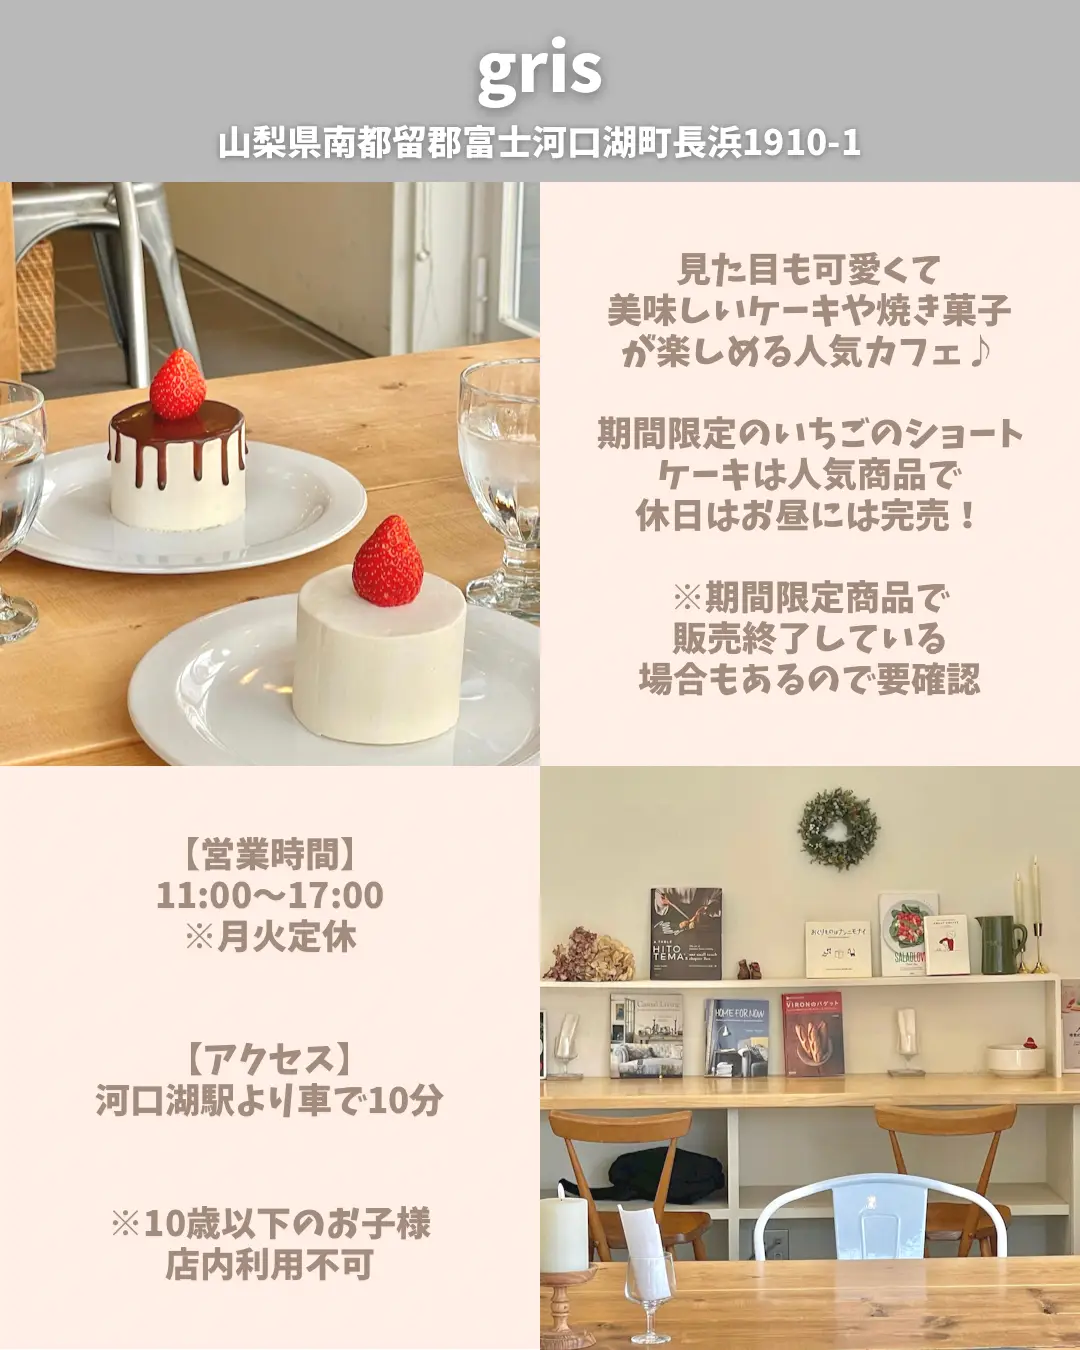 10 Most Photogenic Restaurants in Tokyo Discover Oishii Japan -SAVOR JAPAN  -Japanese Restaurant Guide